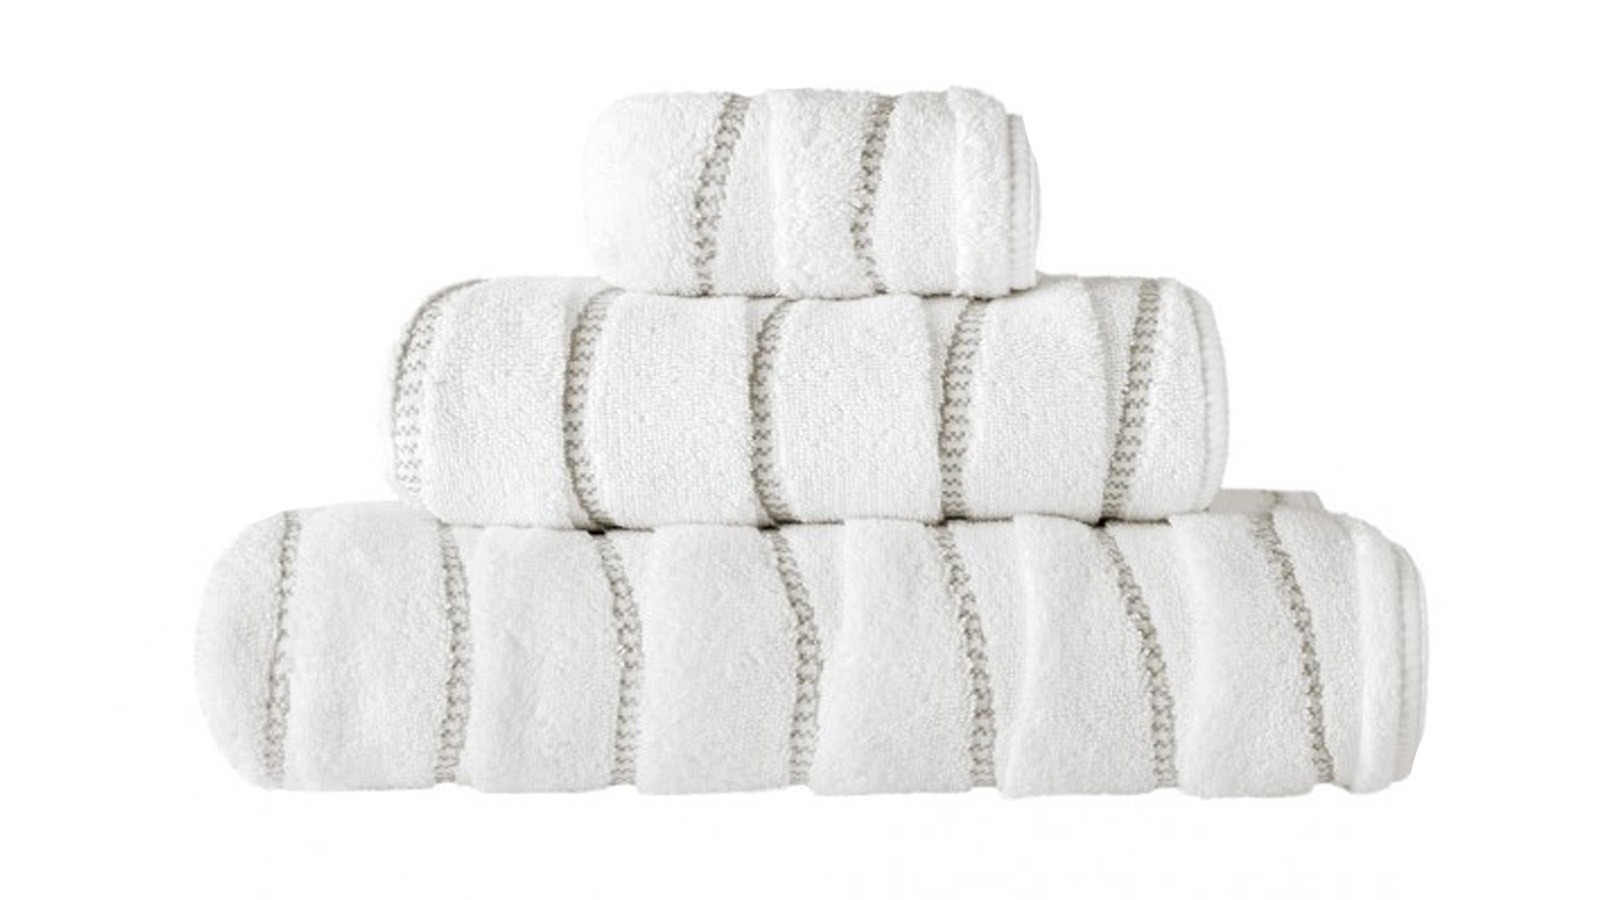 Superior cotton and linen OPERA Towels